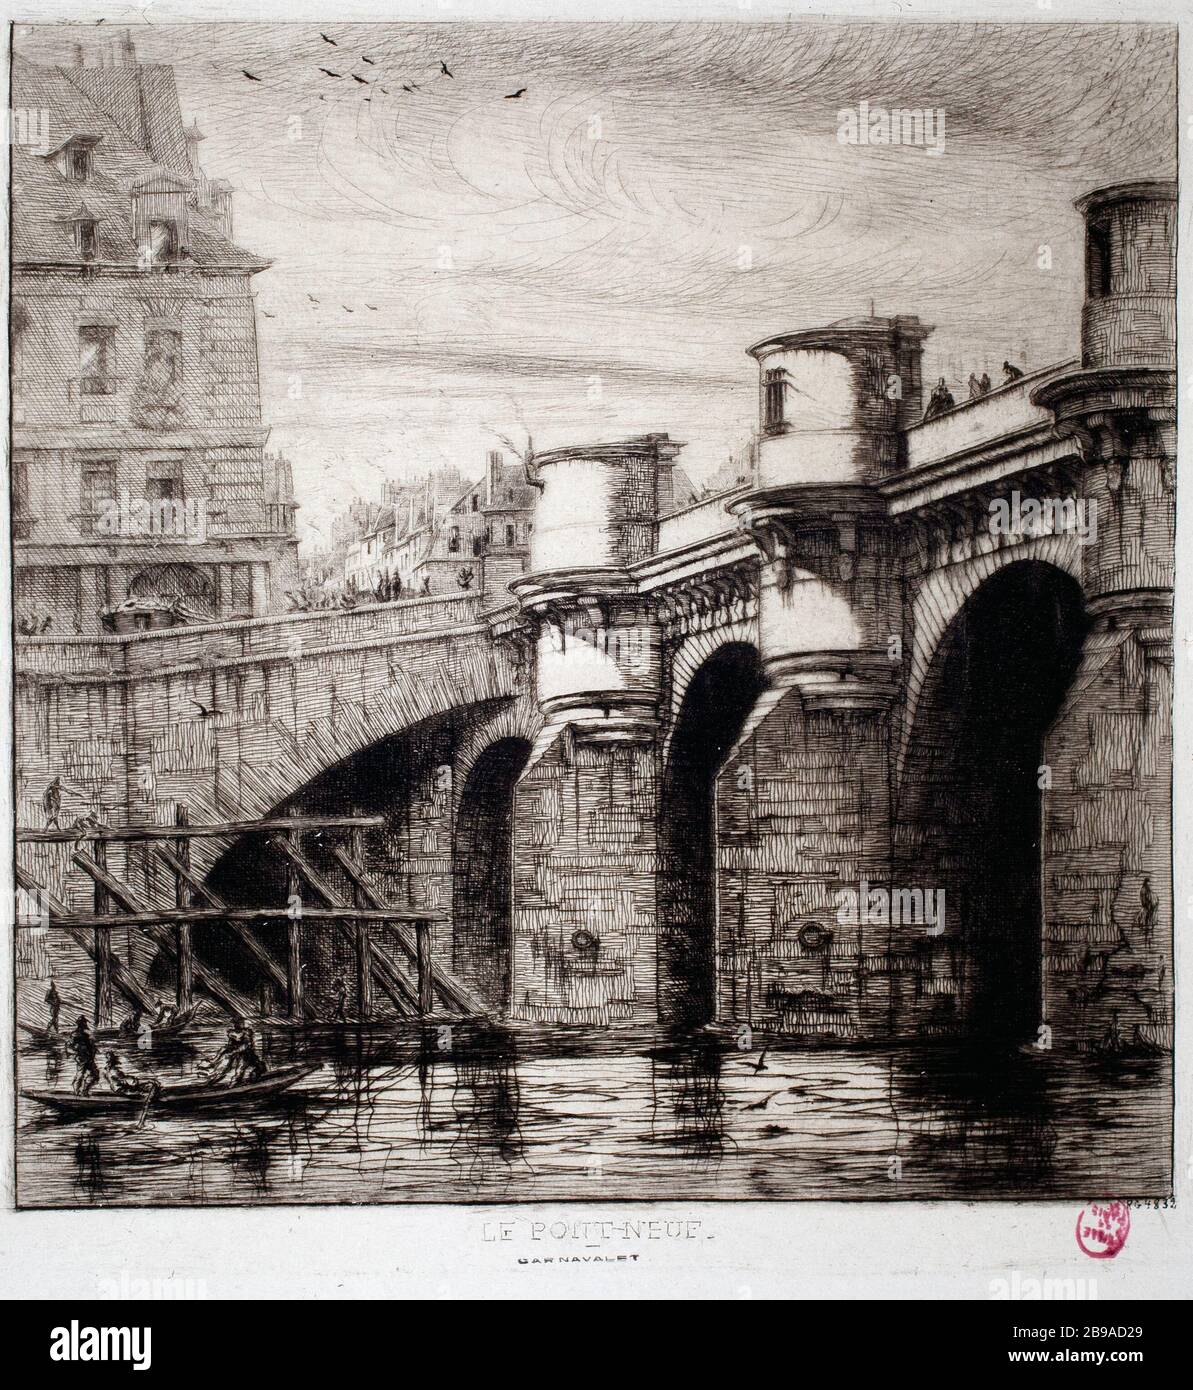 DIE NEUE BRÜCKE Charles Meryon (1821-1868). "Le Pont Neuf". Eau-forte, im Jahr 1853. Paris, musée Carnavalet. Stockfoto